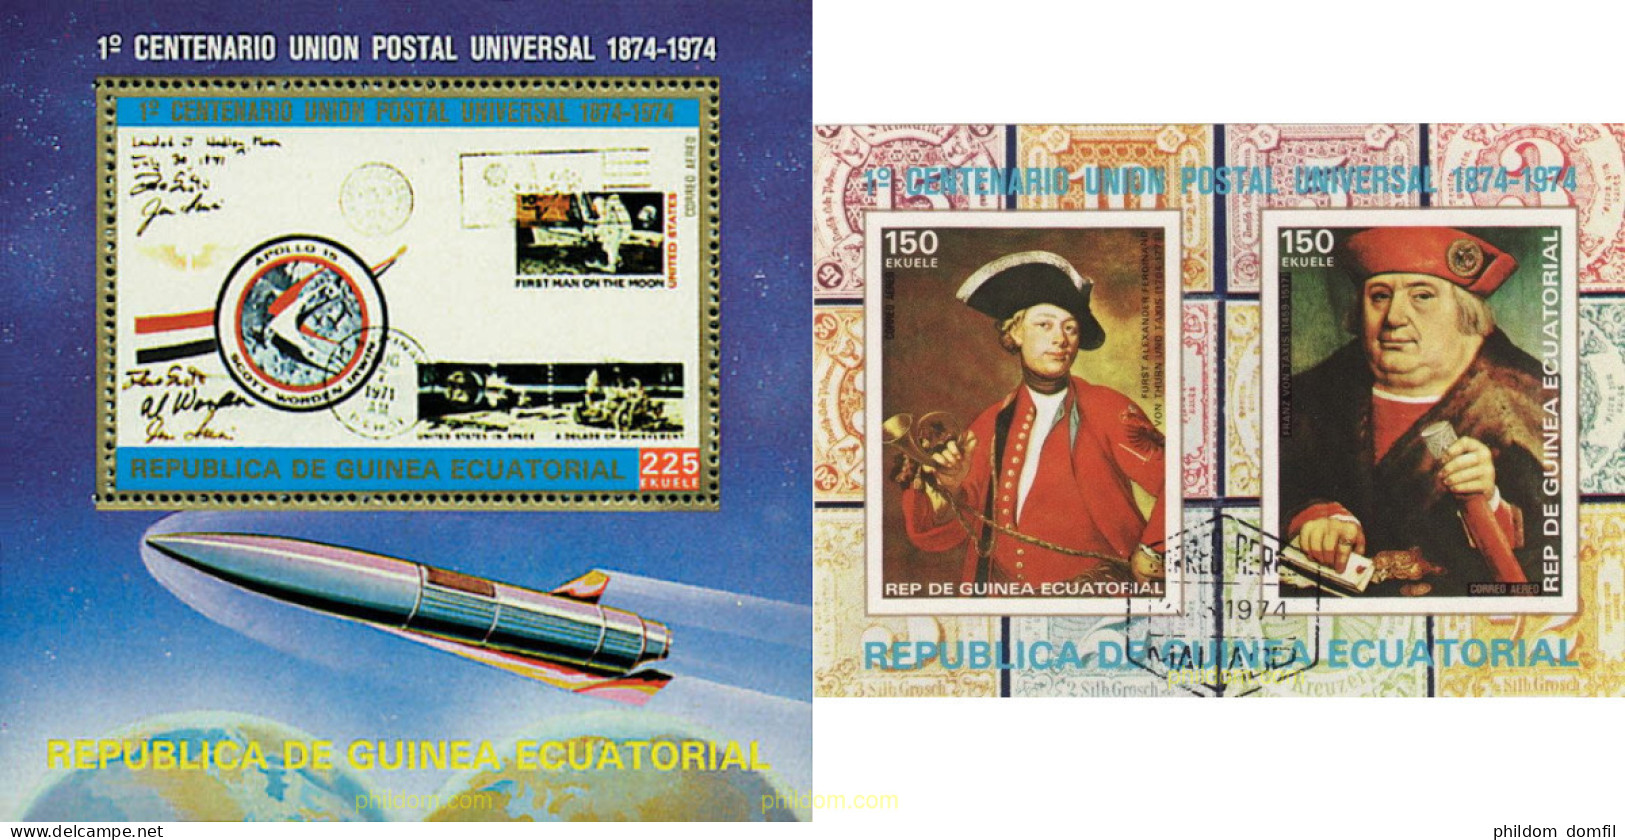 41670 MNH GUINEA ECUATORIAL 1974 CENTENARIO DE LA UNION POSTAL UNIVERSAL - Equatoriaal Guinea